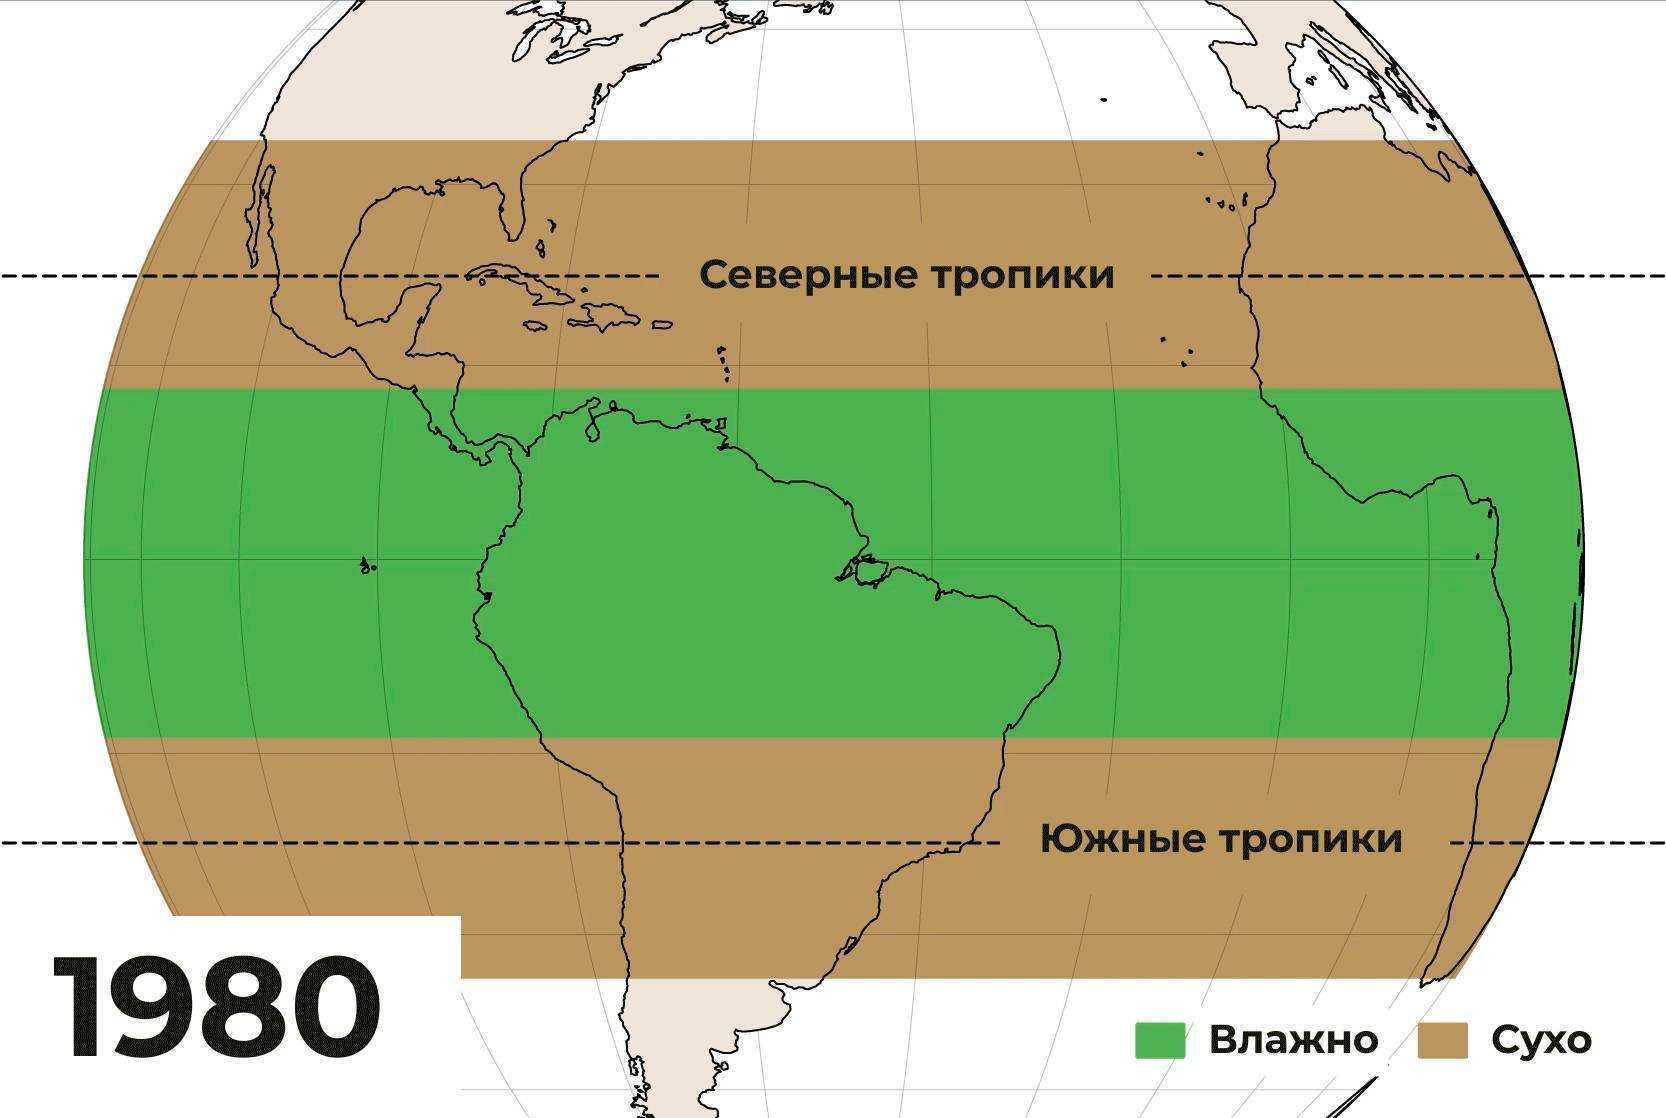 Какова длина окружности земли по экватору в милях и километрах